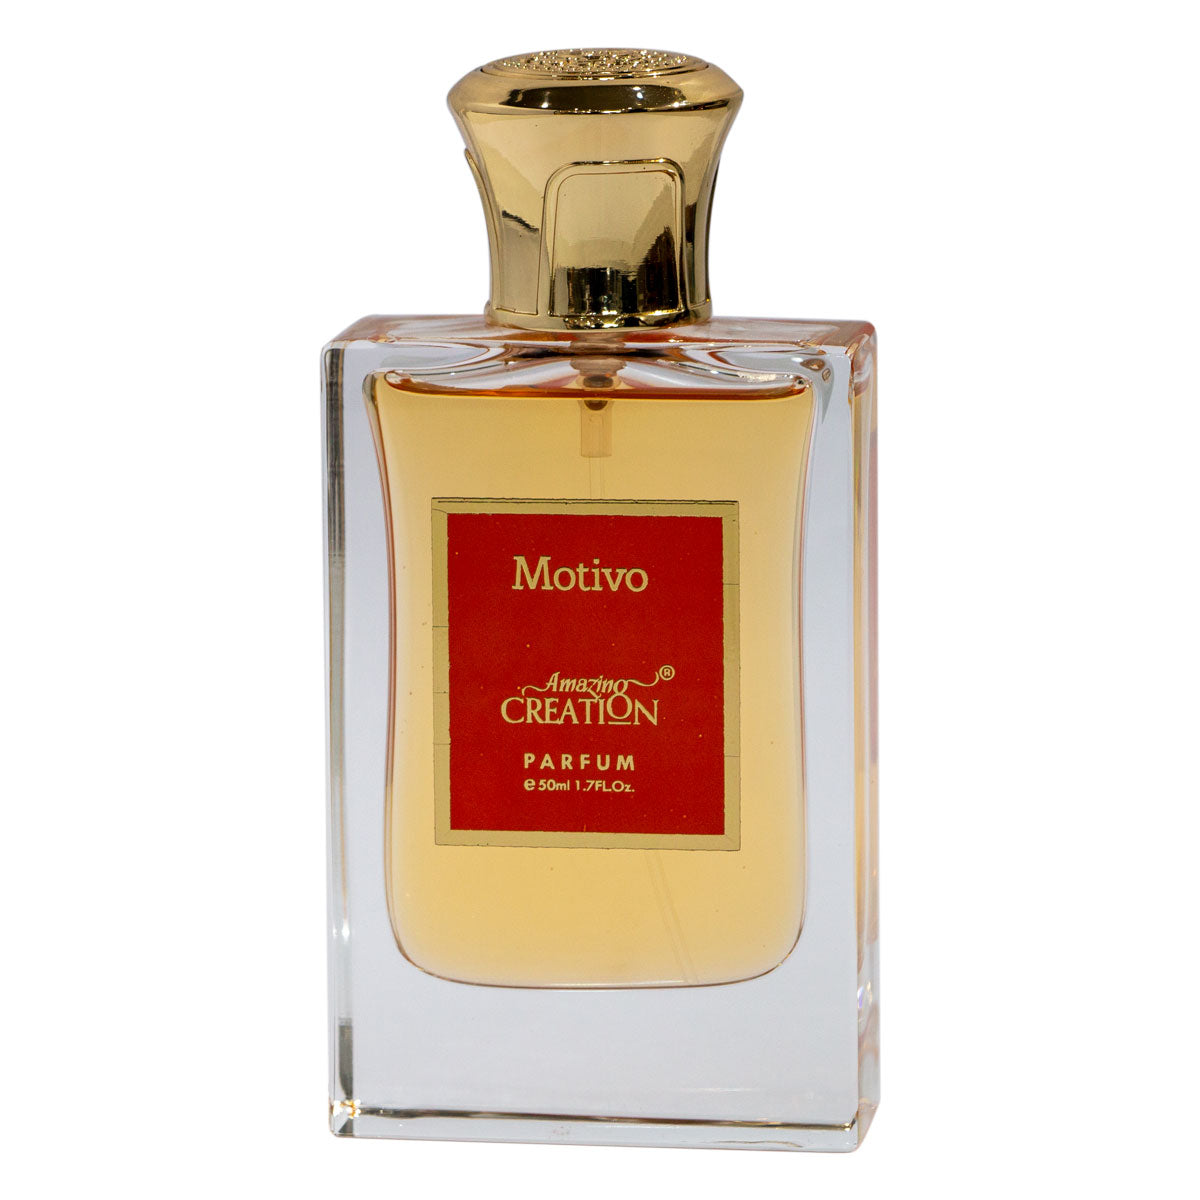 Motivo By Amazing Creation Perfume for Men, Parfum, 50ml - samawa perfumes 